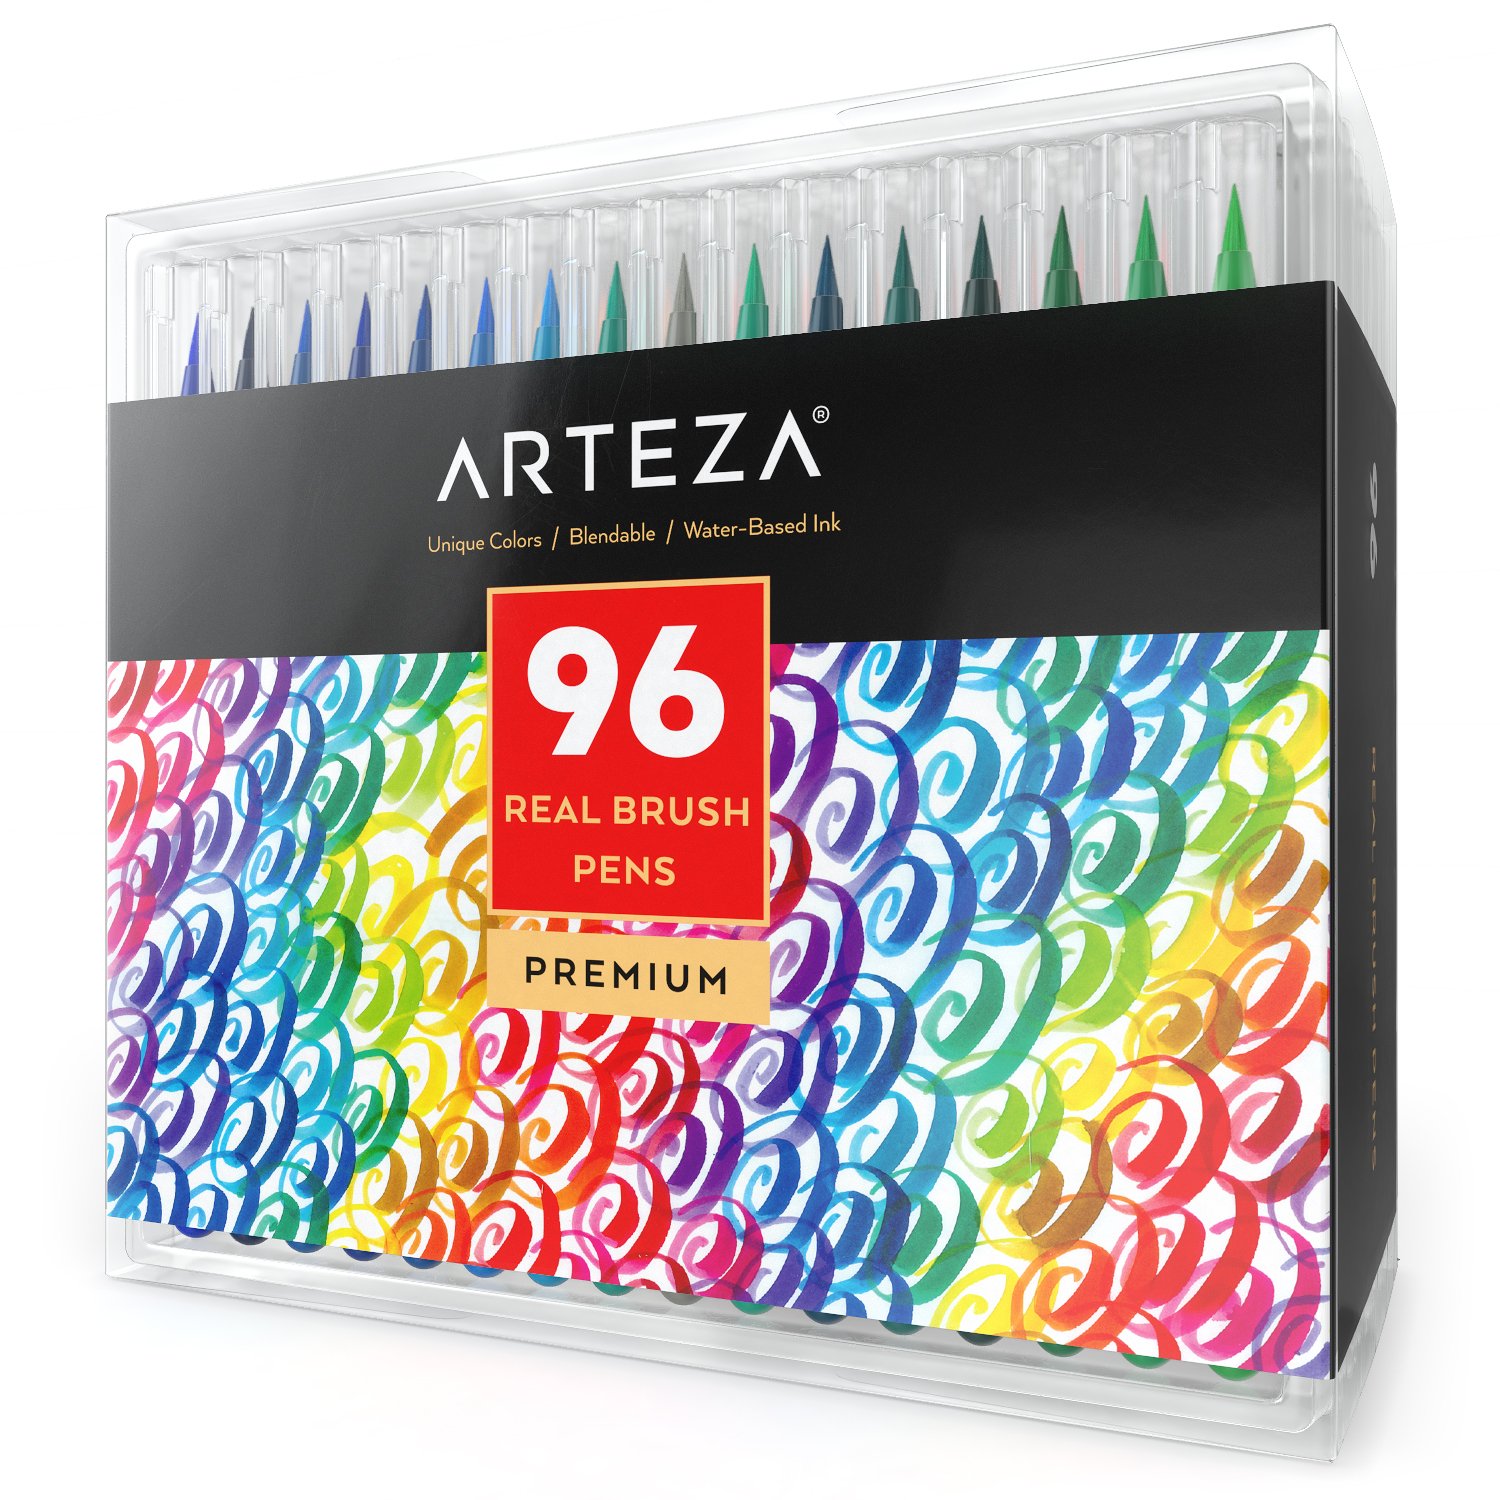 Arteza Real Brush Pens - Set of 96